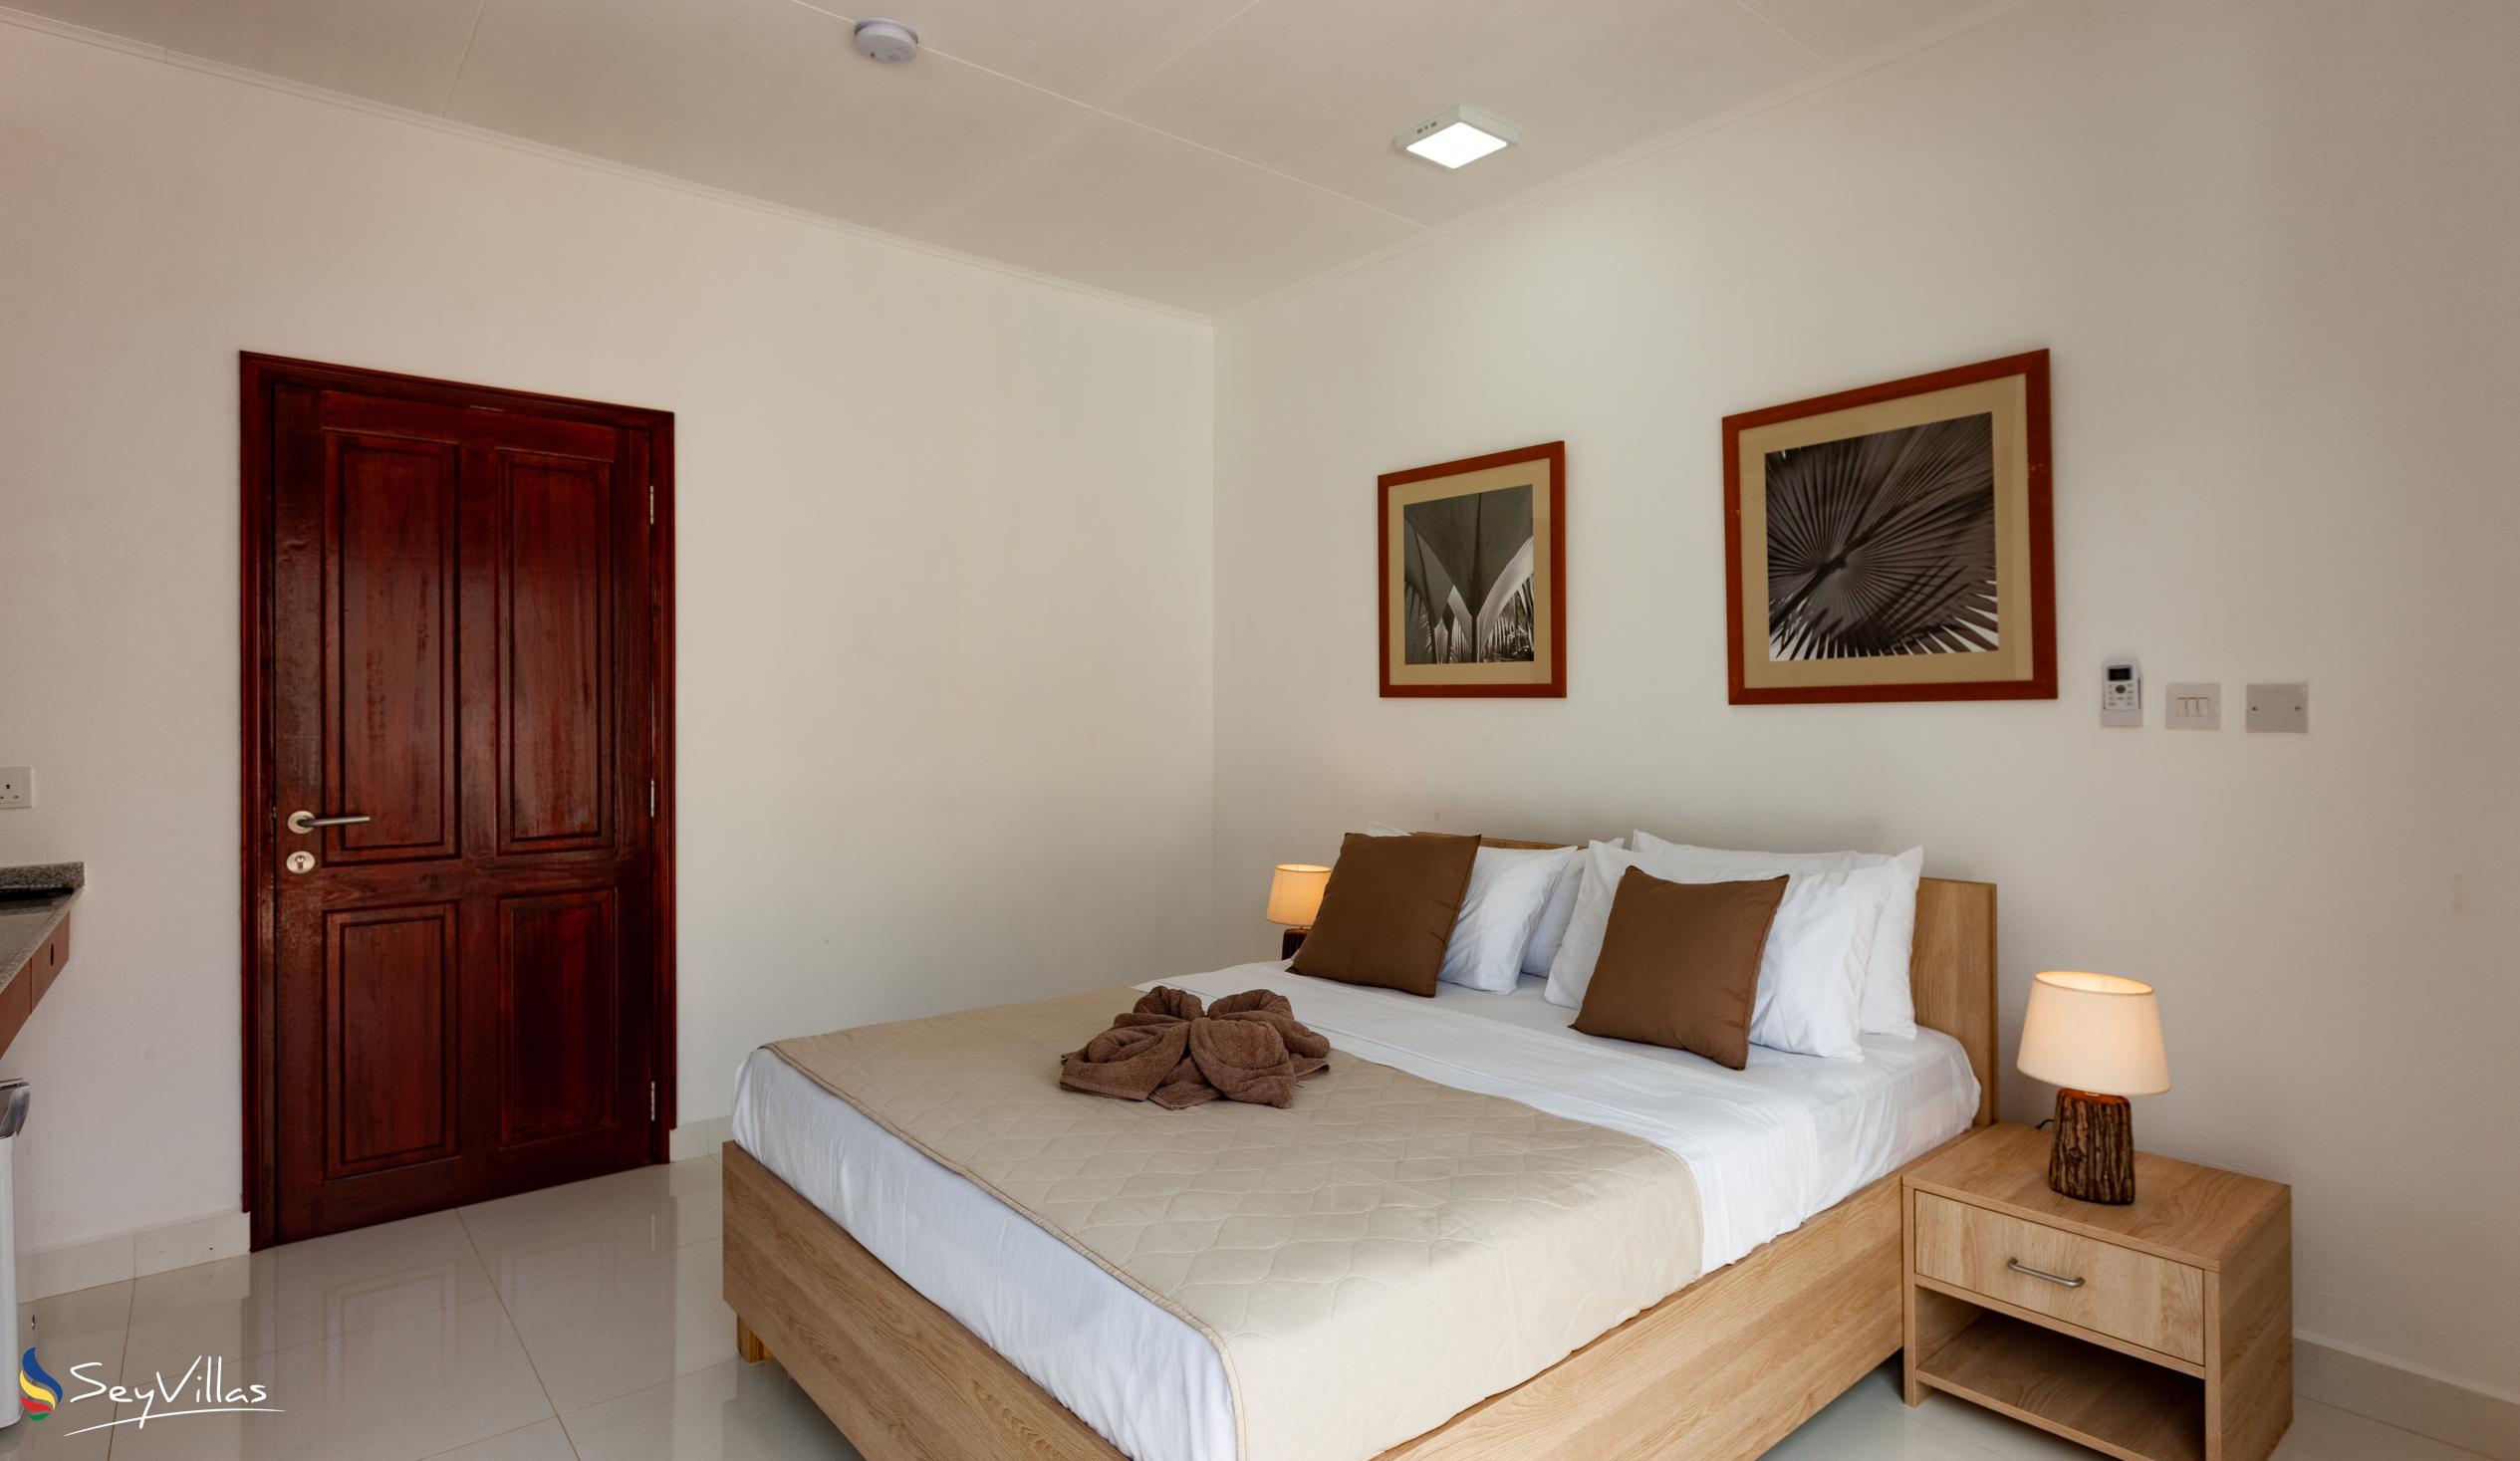 Foto 28: Hotel Plein Soleil - Chambre de luxe avec lit queen-size - Praslin (Seychelles)